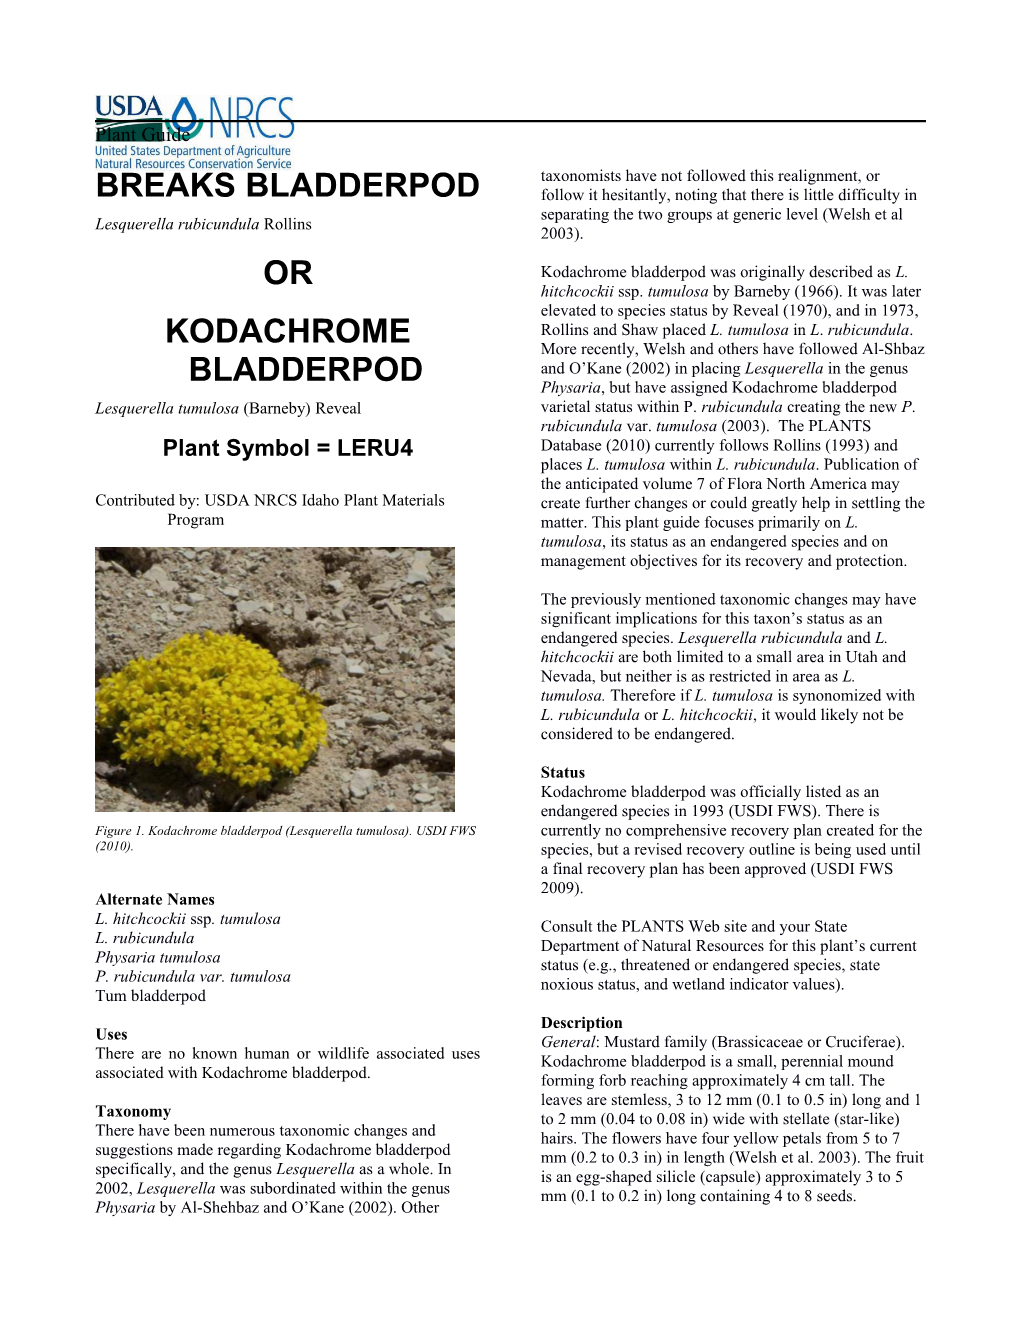 Plant Guide for Breaks Bladderpod (Lesquerella Rubicundula) Or Kodachrome Bladderpod